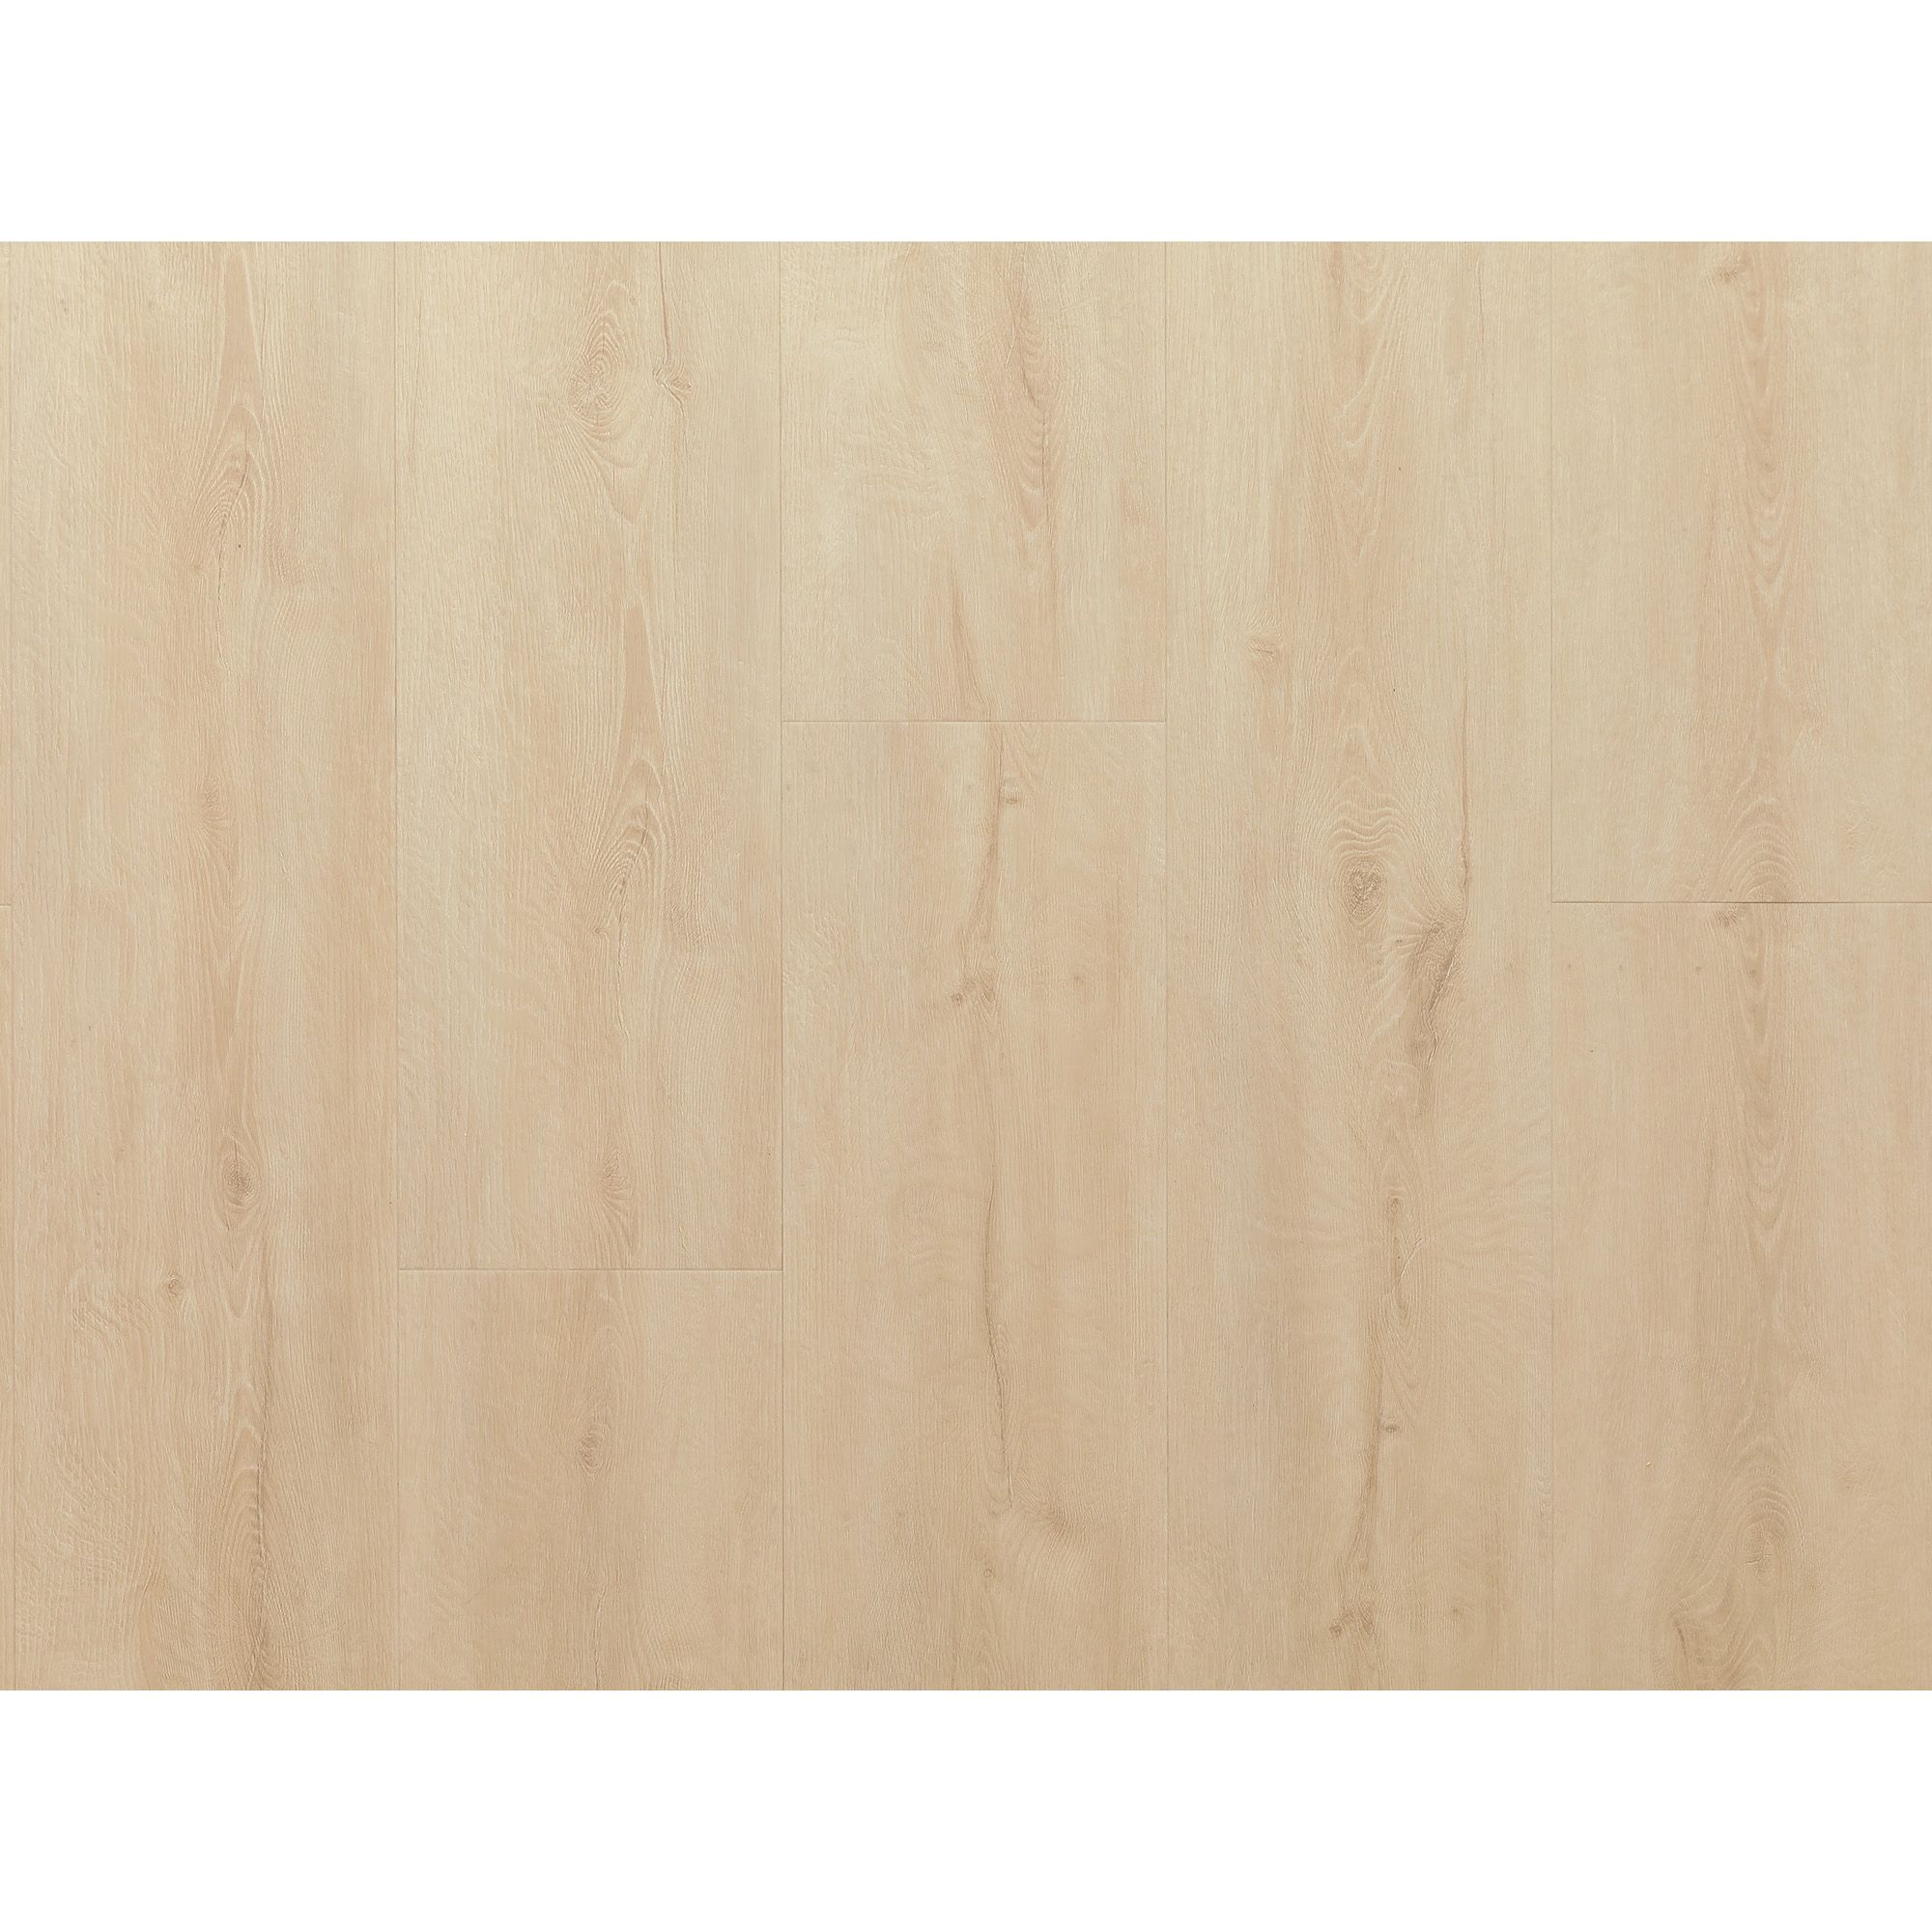 Stone Composite LVP Flooring - White Oak - NewAge Products